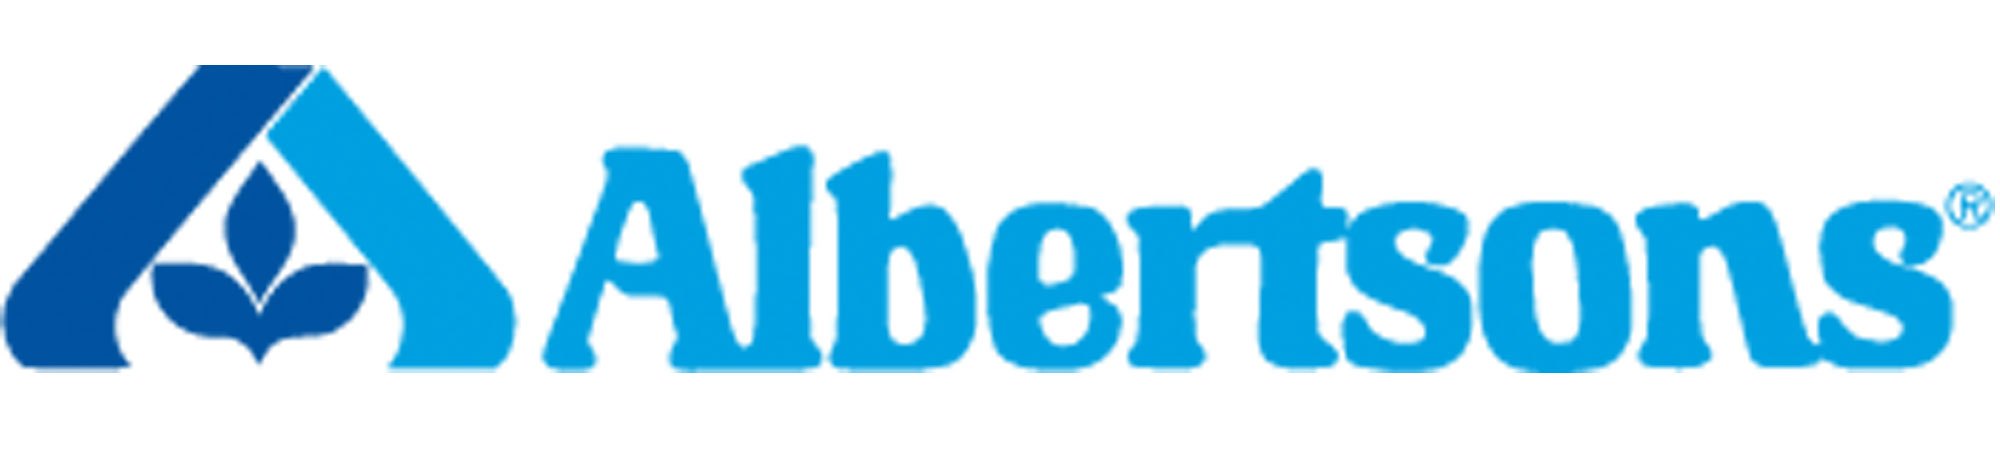 Albertsons logo.png